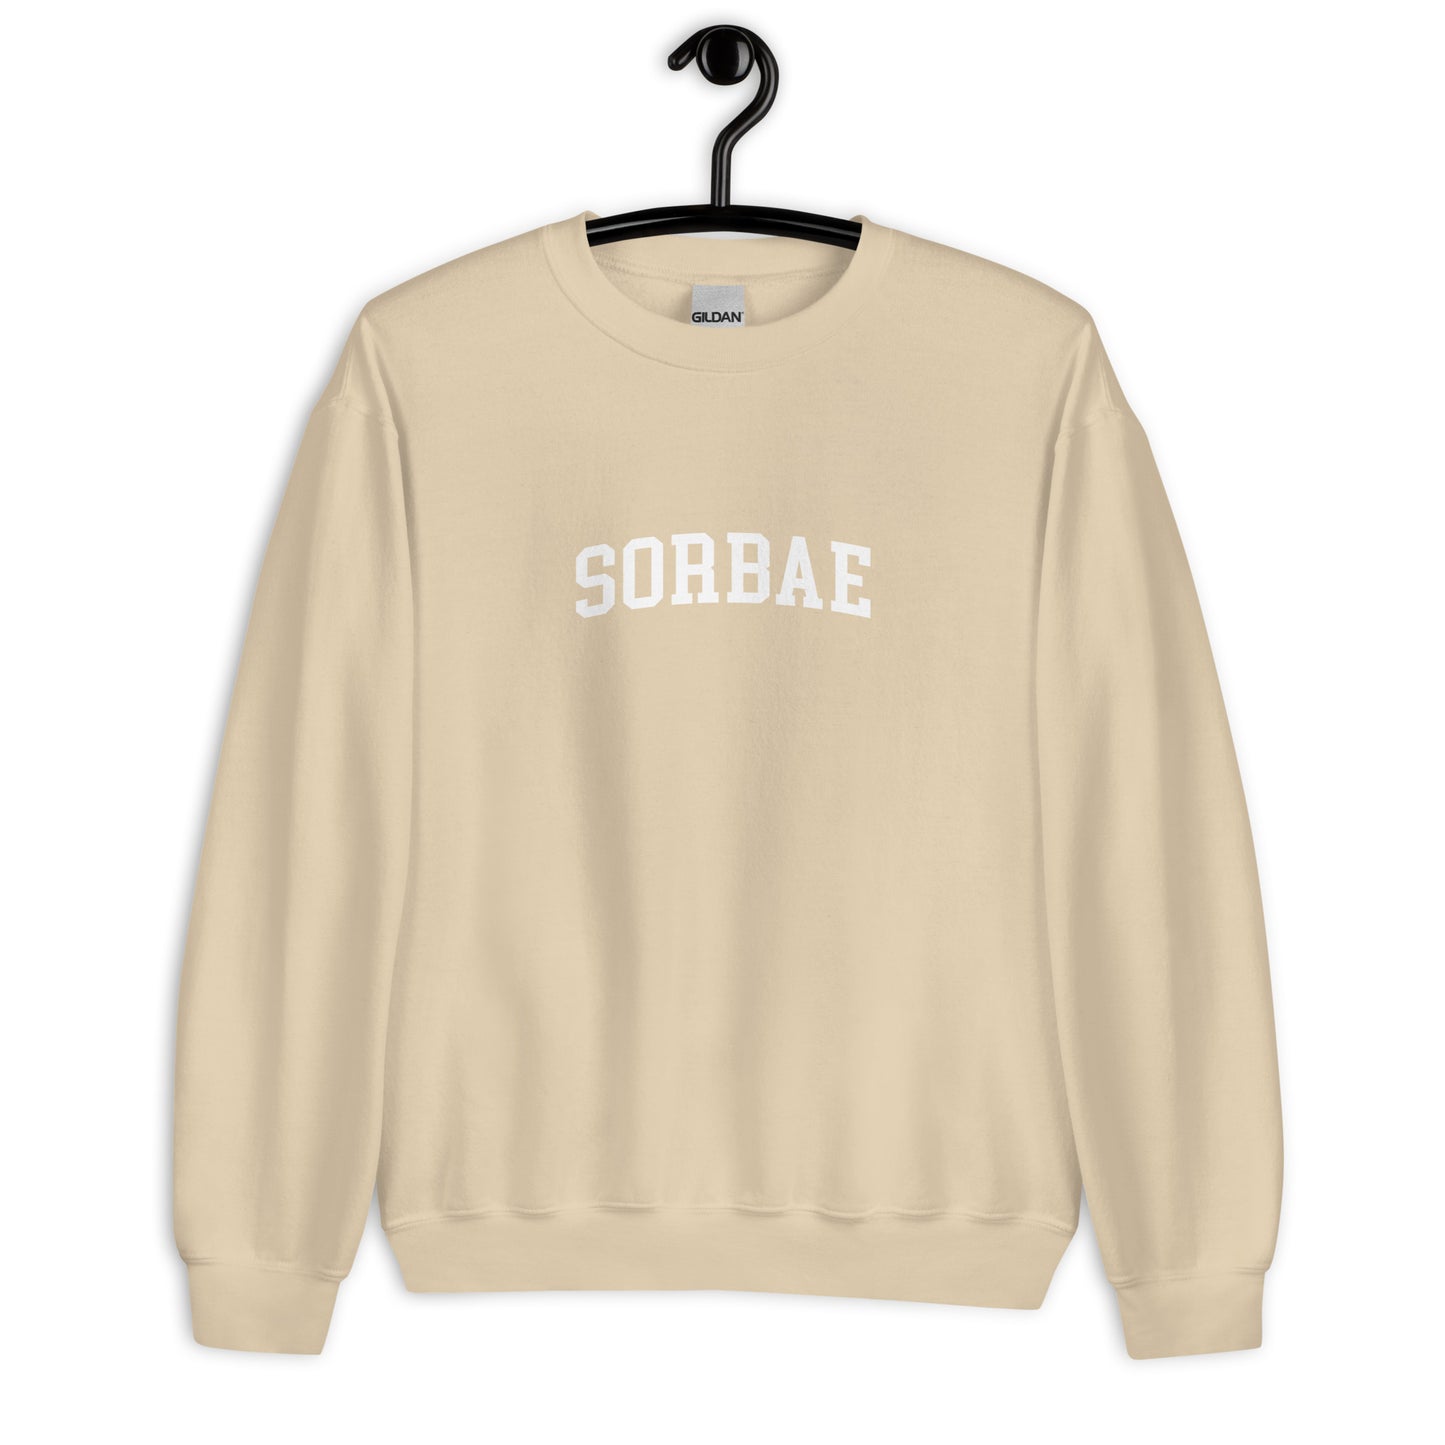 Sorbae Sweatshirt - Arched Font